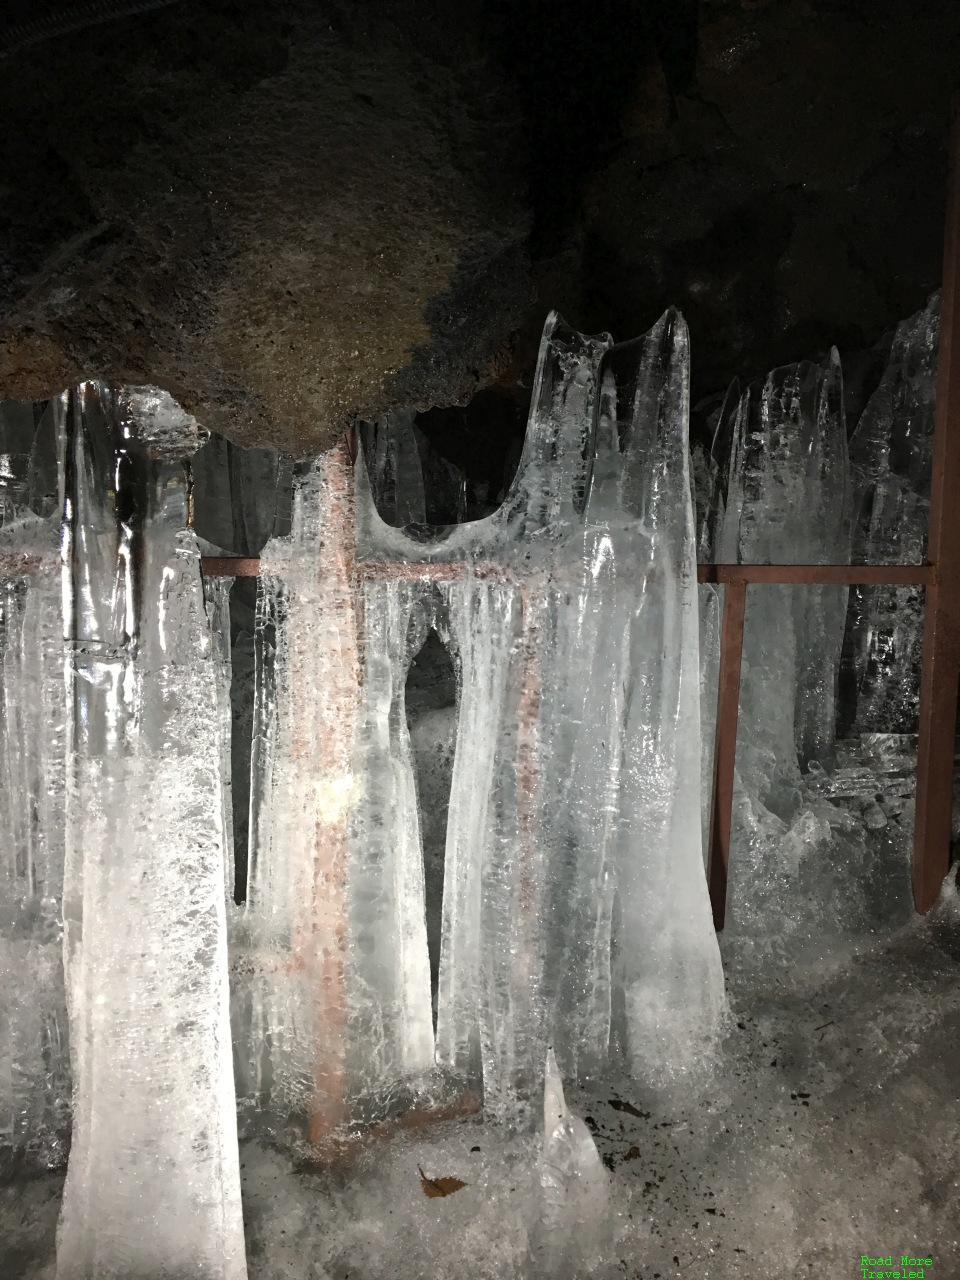 Fuji Five Lakes Region - Narusawa Ice Cave ice pillars